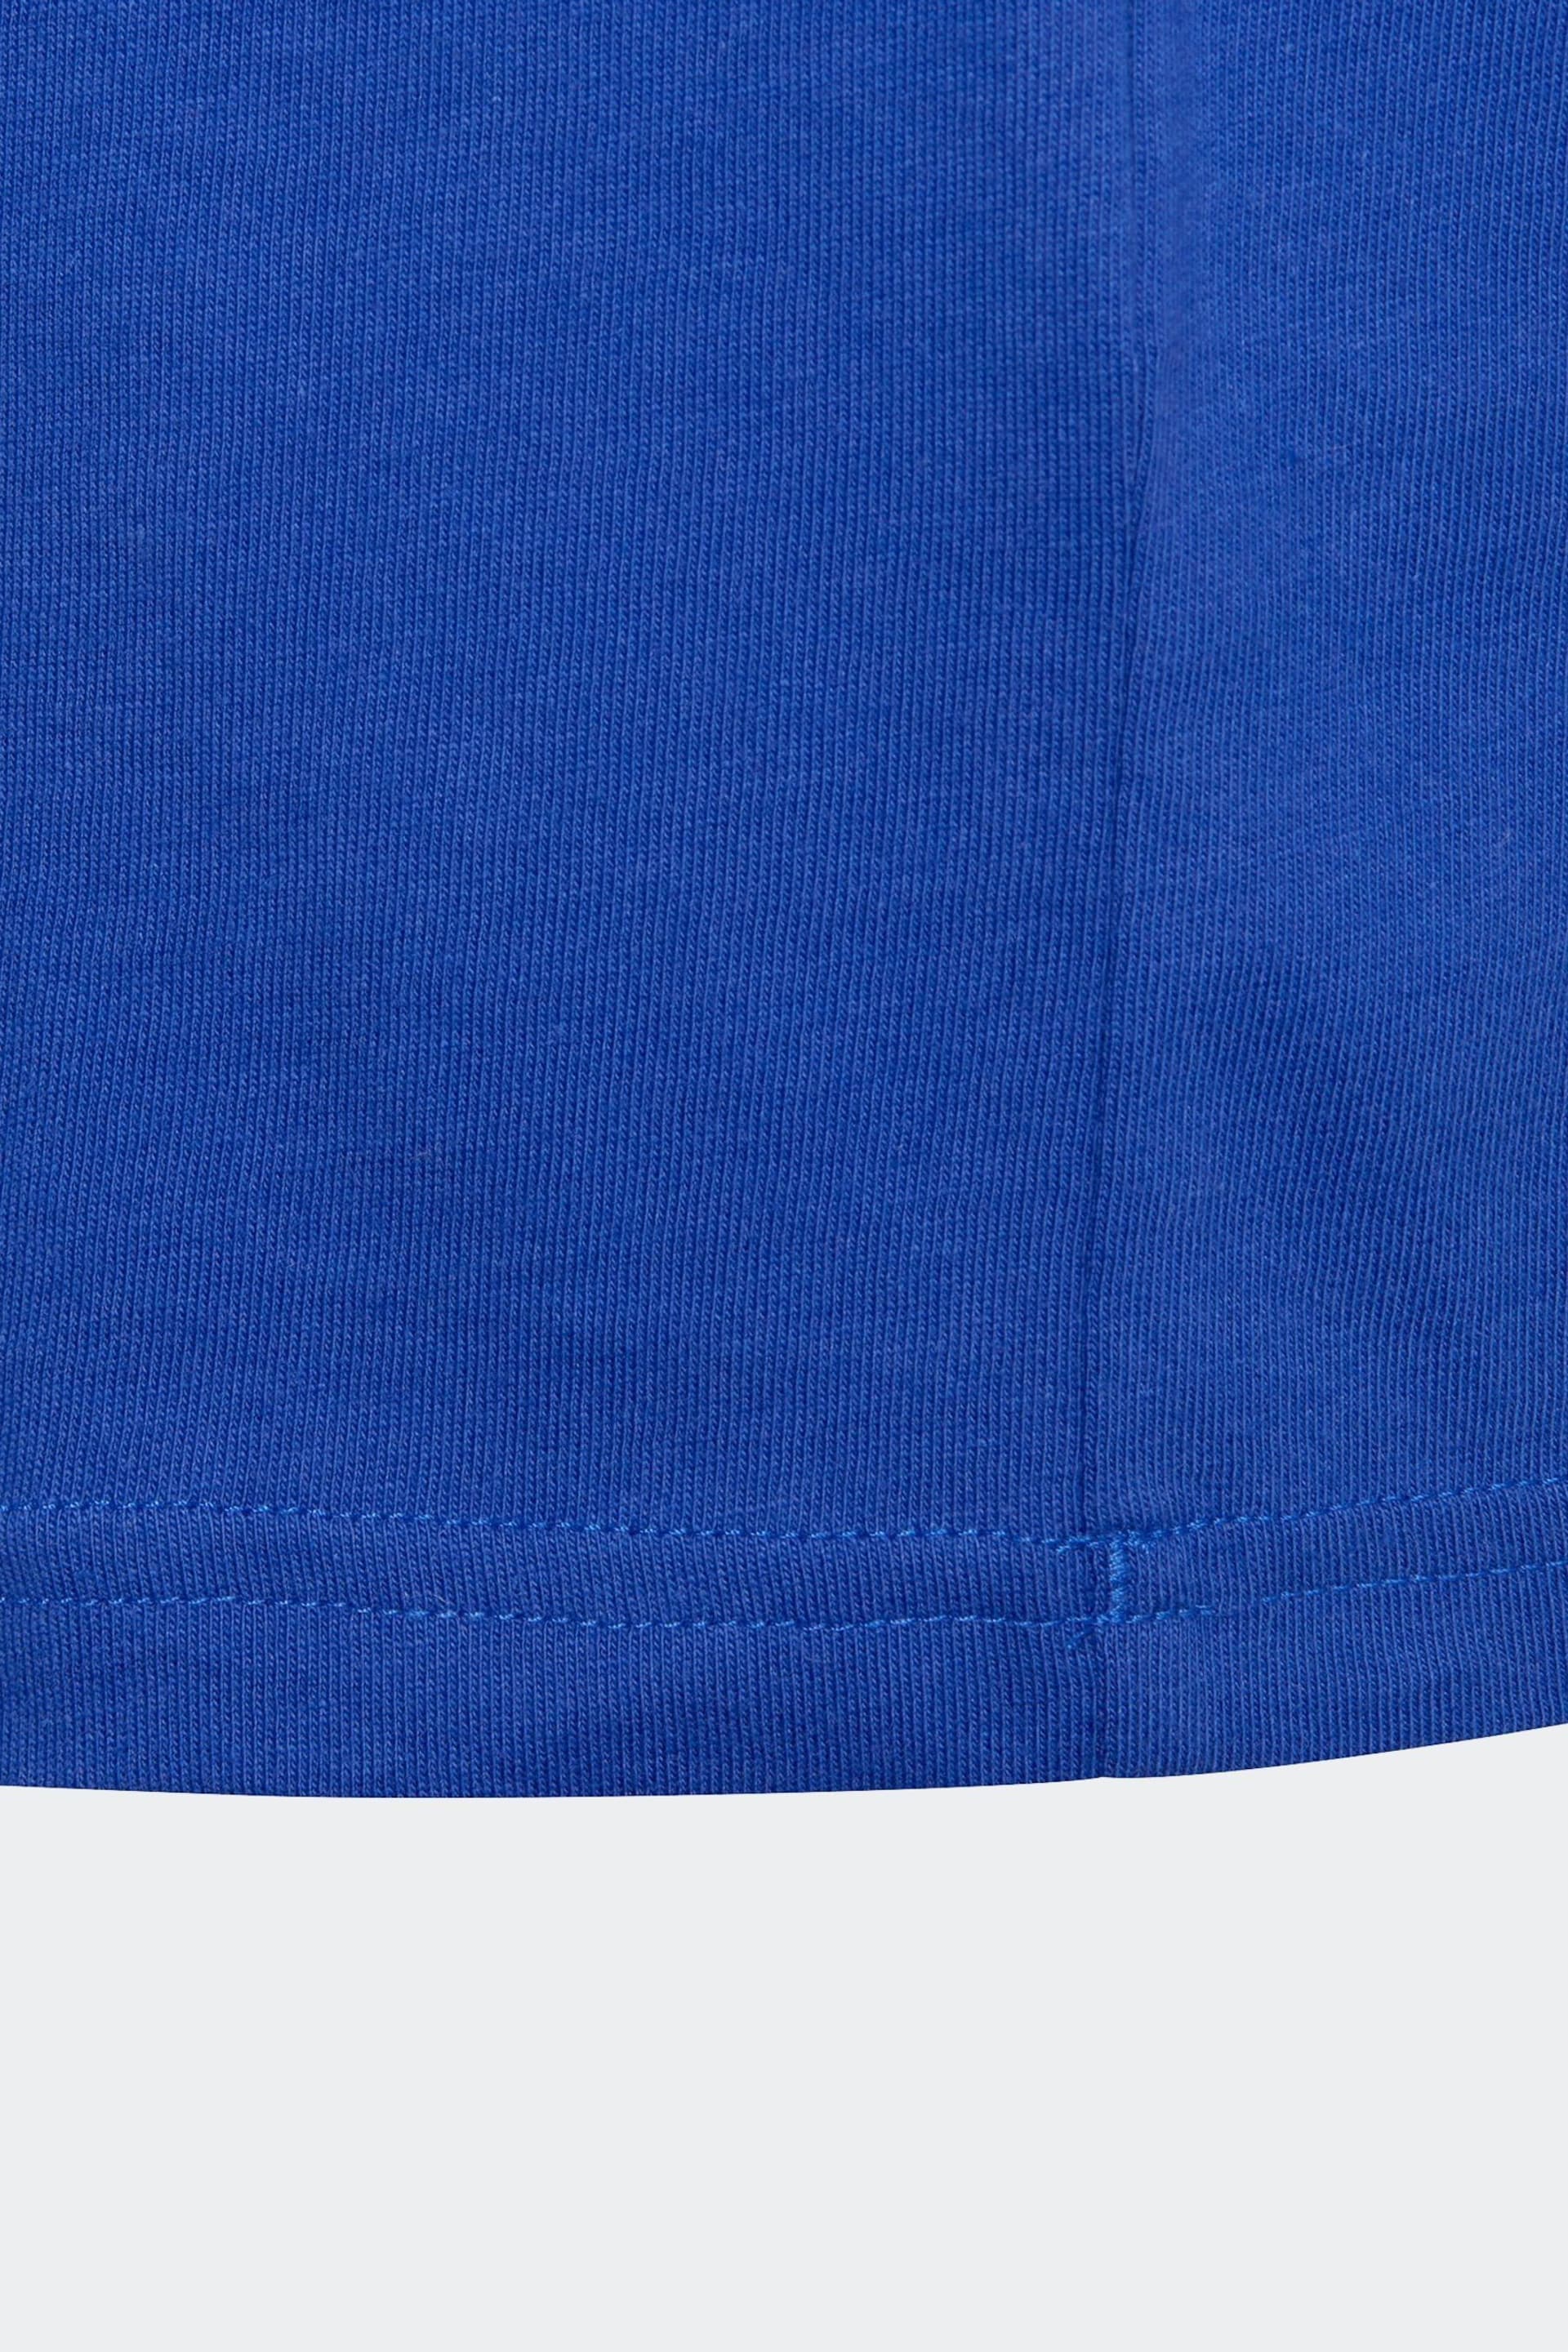 adidas Blue Essentials 3-Stripes Cotton T-Shirt - Image 5 of 5